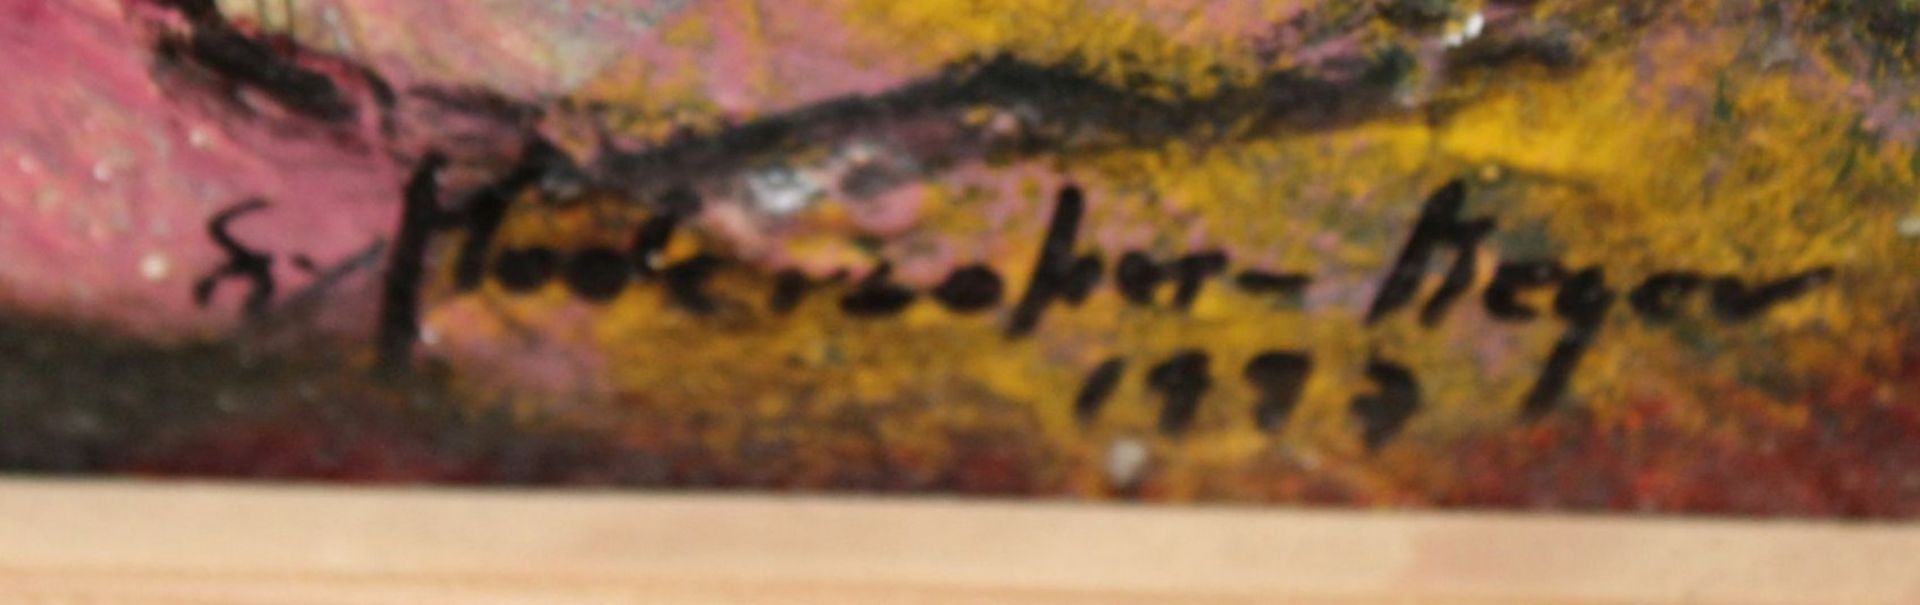 Gisela MODERSOHN-MEYER (1941), Vögel, datiert 1997, Öl/Hartfaser, gerahmt, RG 70,5 x 60,5cm. - Bild 2 aus 4